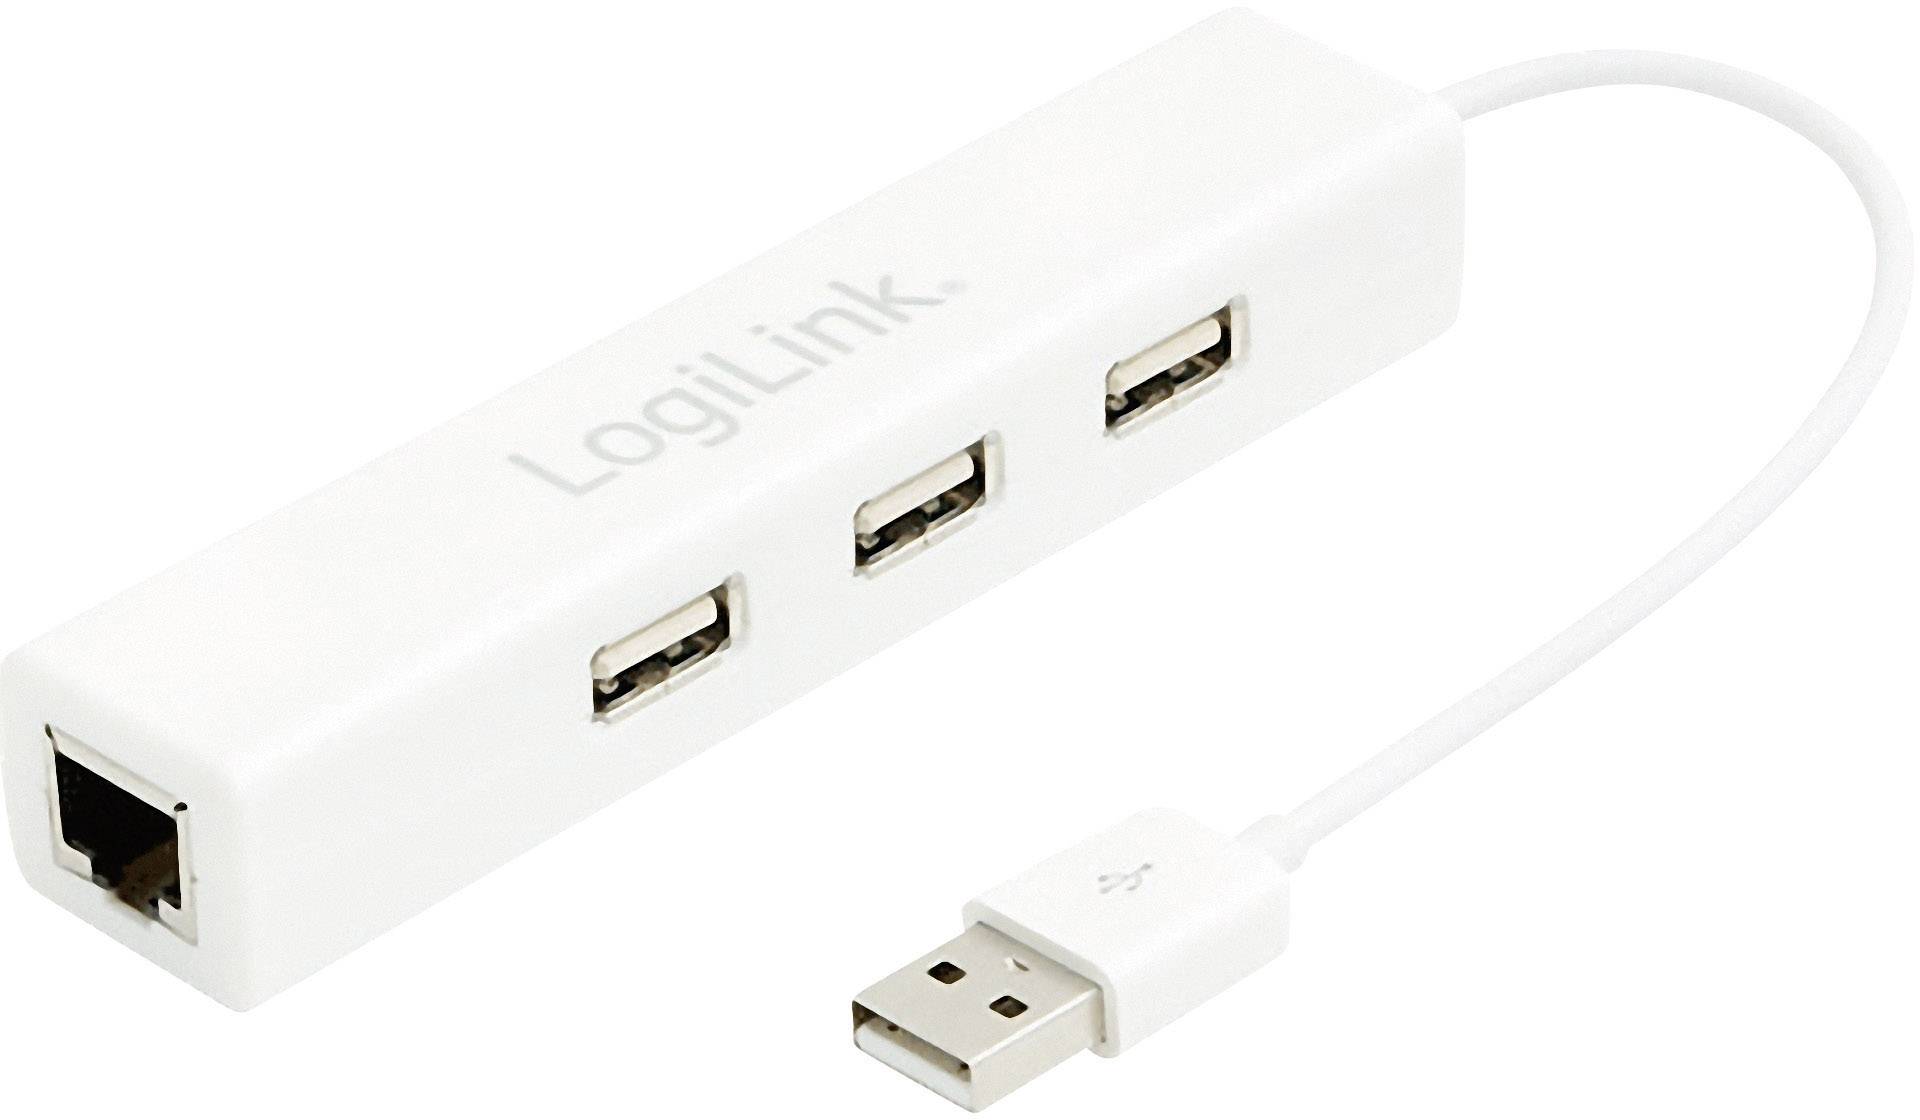 LogiLink Adapter USB 2.0 weiß